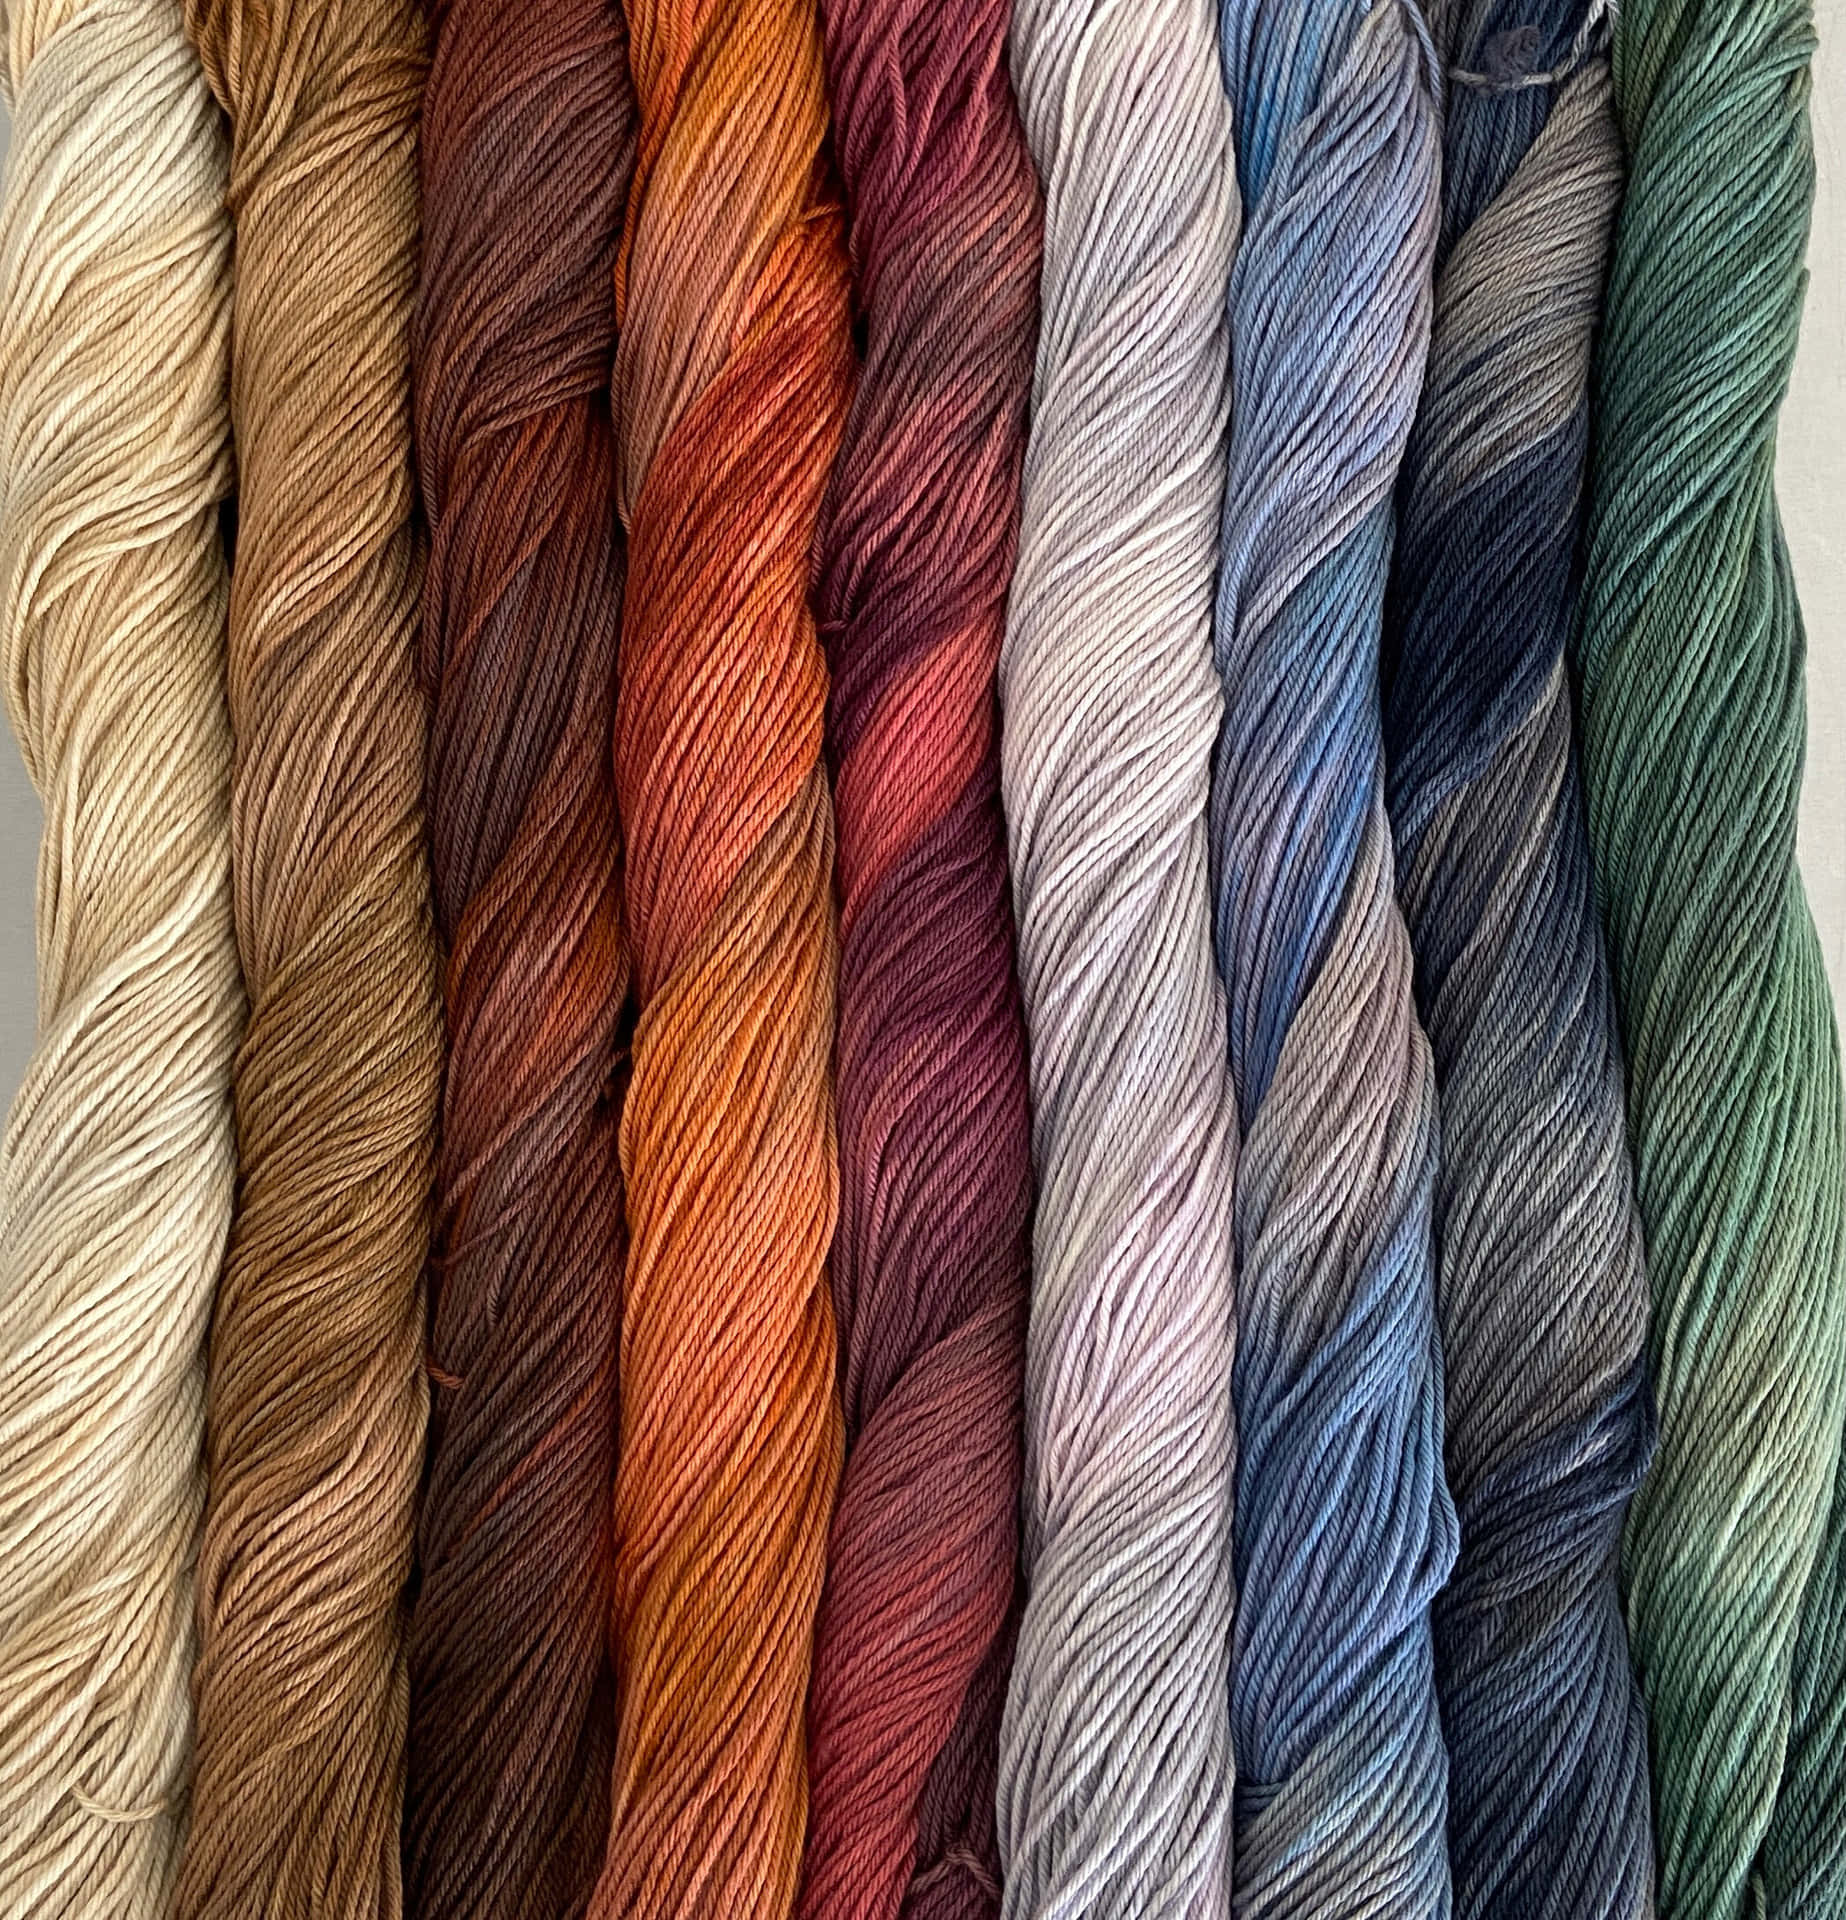 Knitting Cotton Rope Yarns Wallpaper